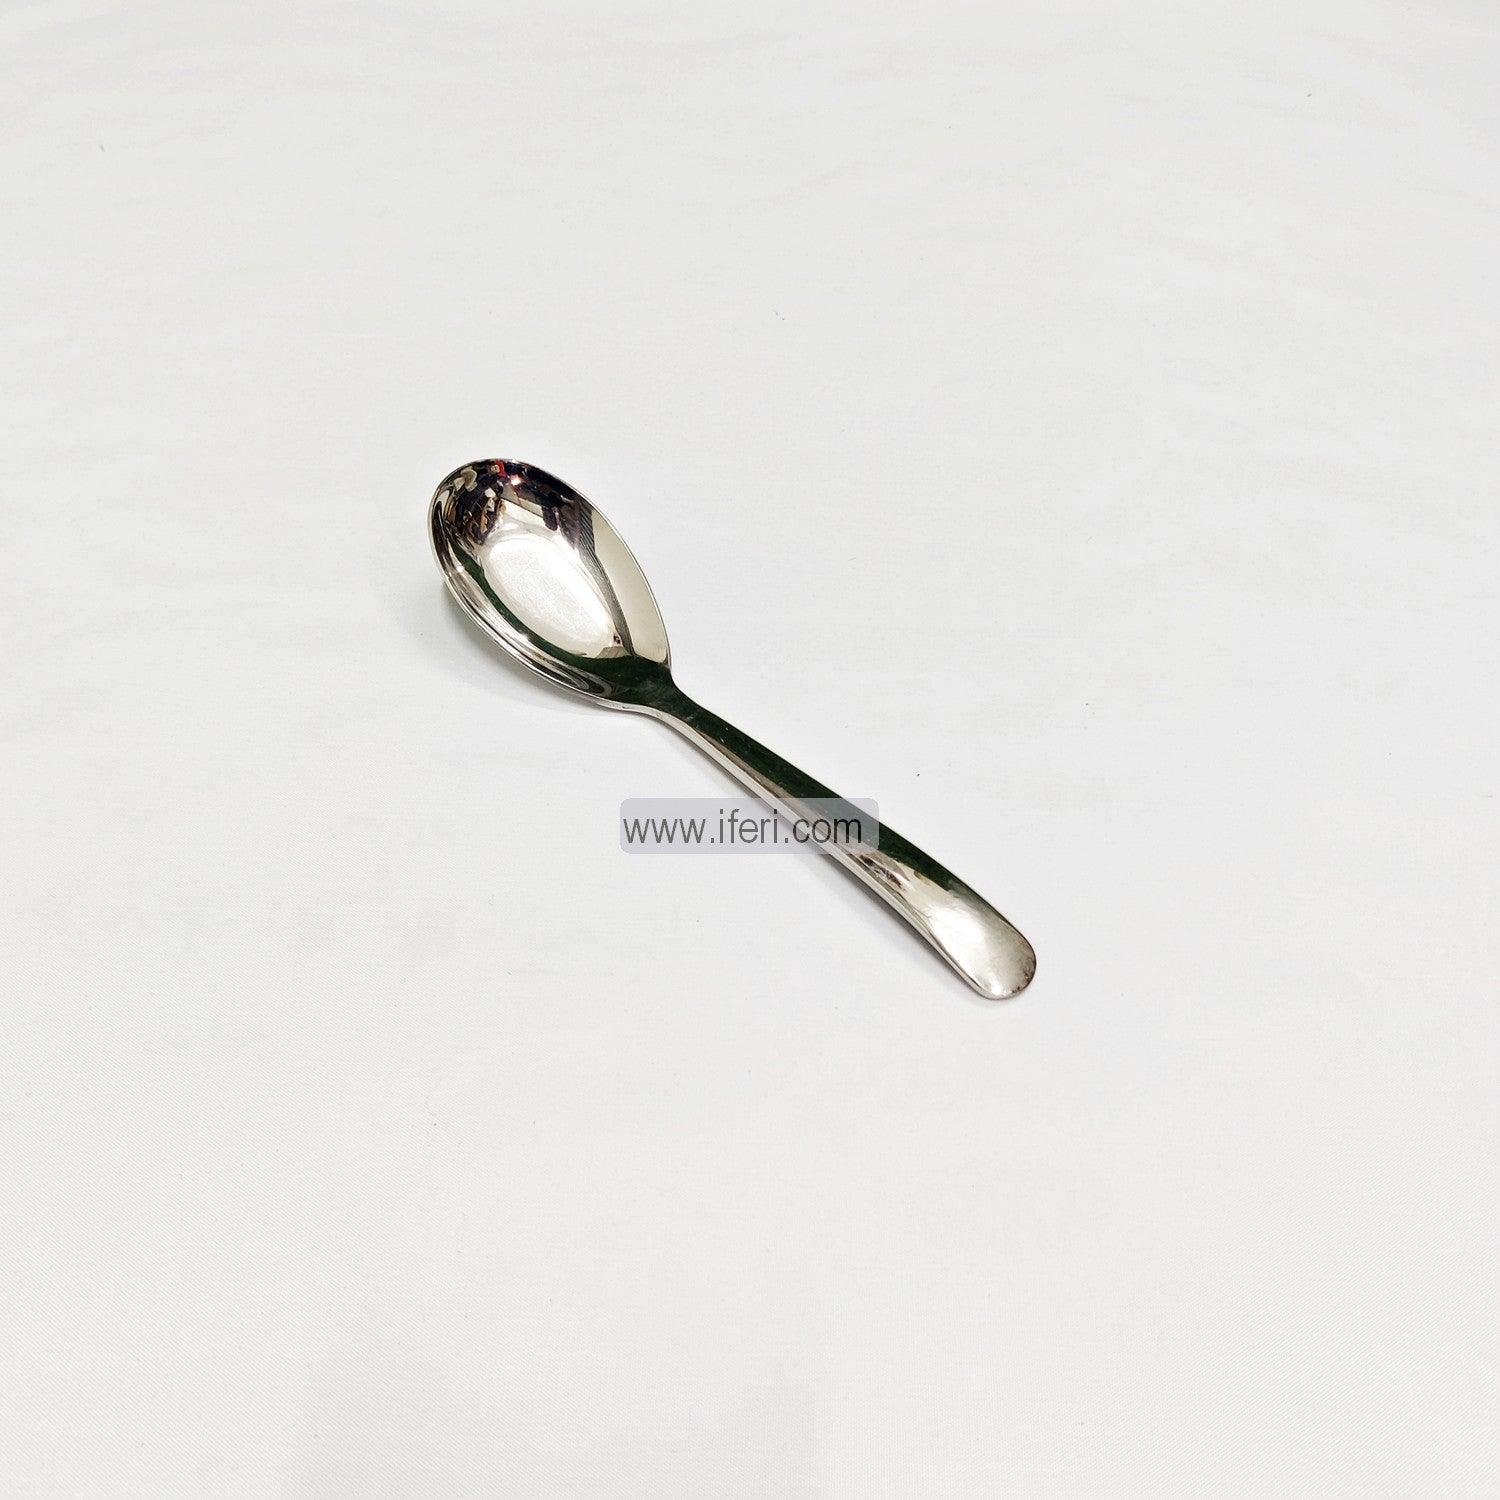 6.8 inch 6 pcs Metal Soup Spoon EB9121 Price in Bangladesh - iferi.com